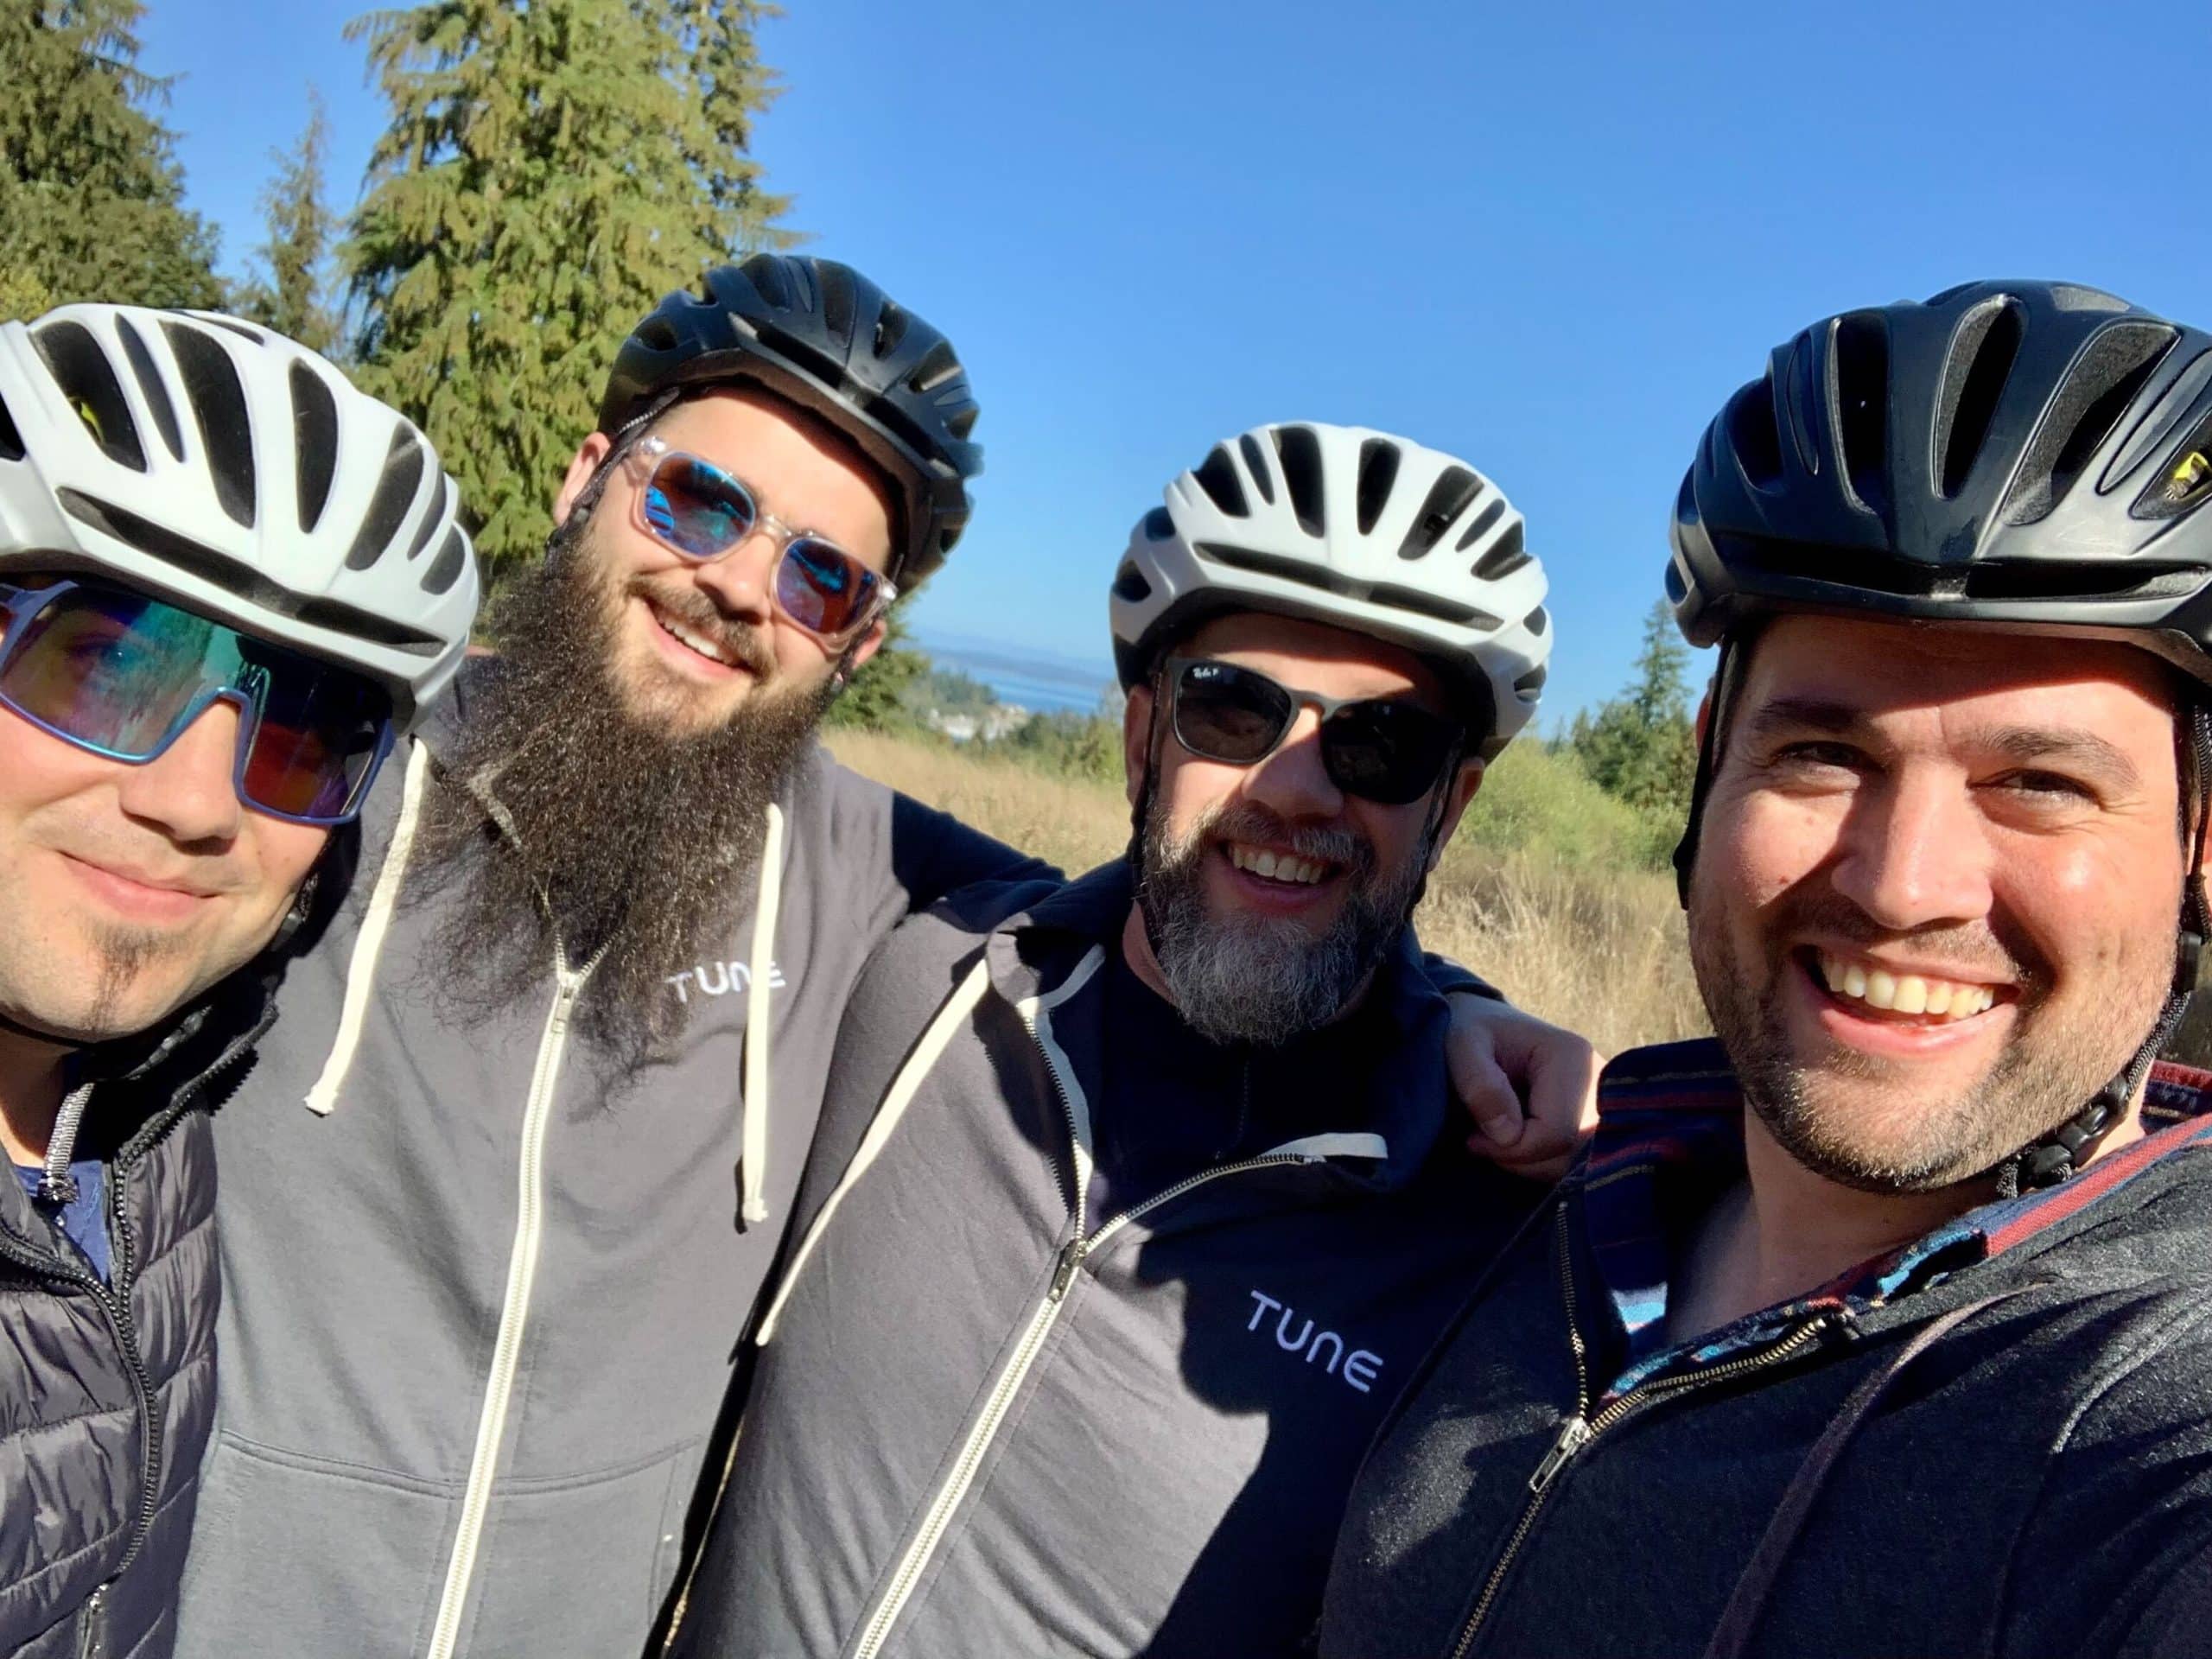 Dan, Matt, Nate, and Josiah take a pic before getting on their e-bikes at the TUNE retreat